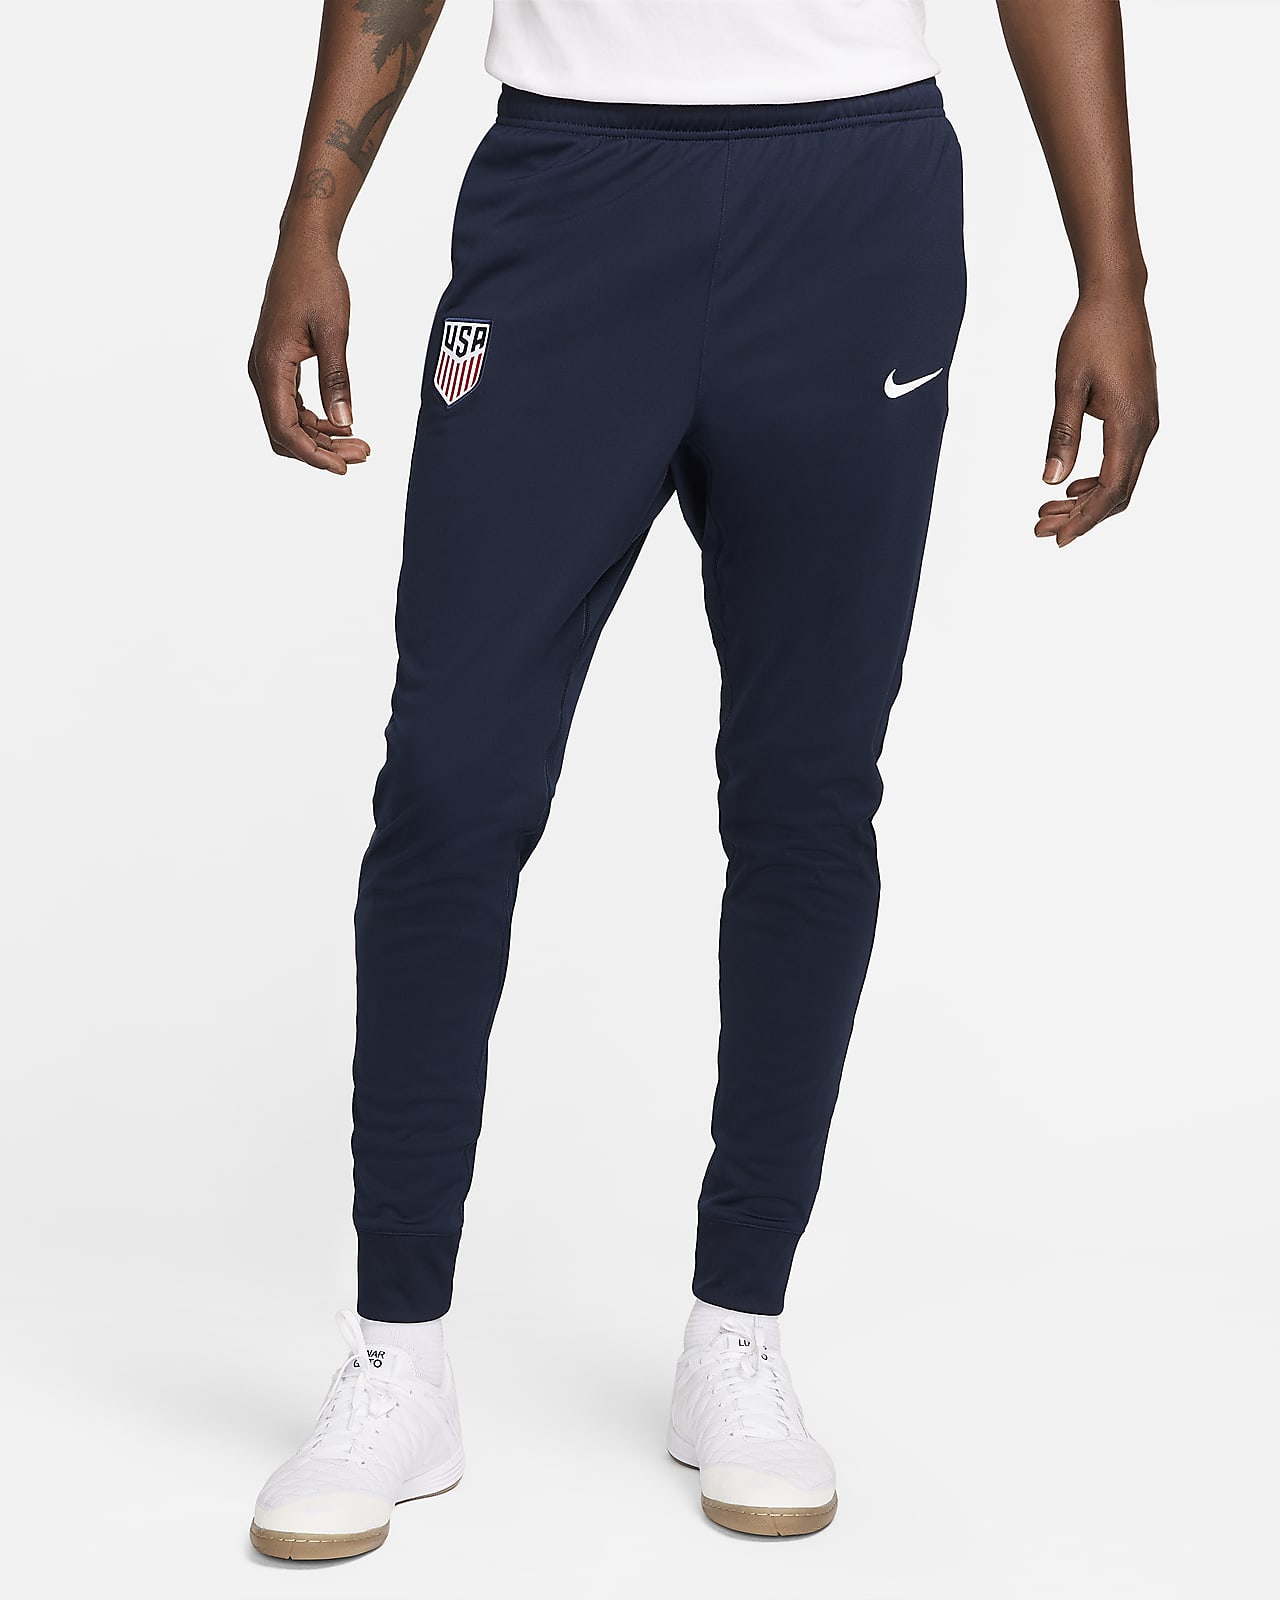 USMNT Strike Men's Nike Dri-FIT Soccer Track Pants